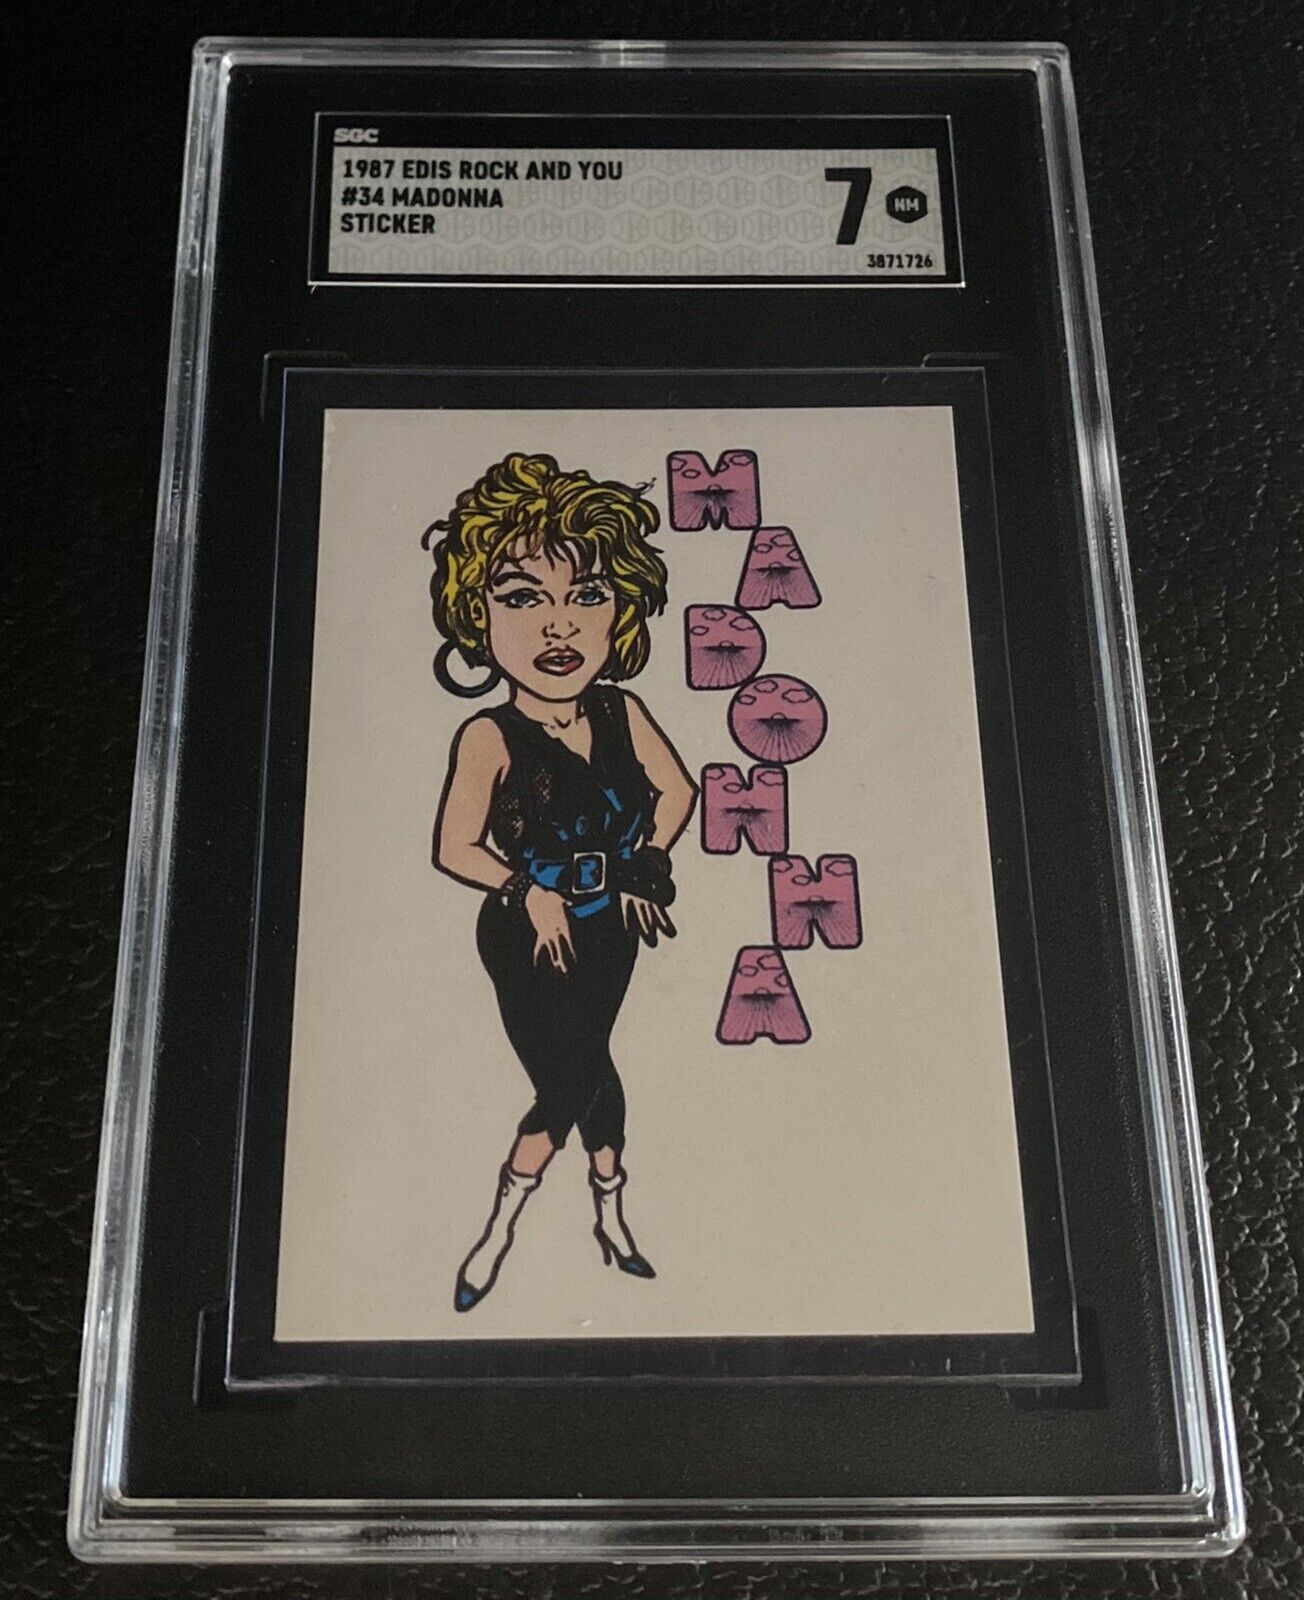 Madonna SGC 7 1987 Edis Rock And You Card Sticker Low Pop Music HOF Vintage 80s